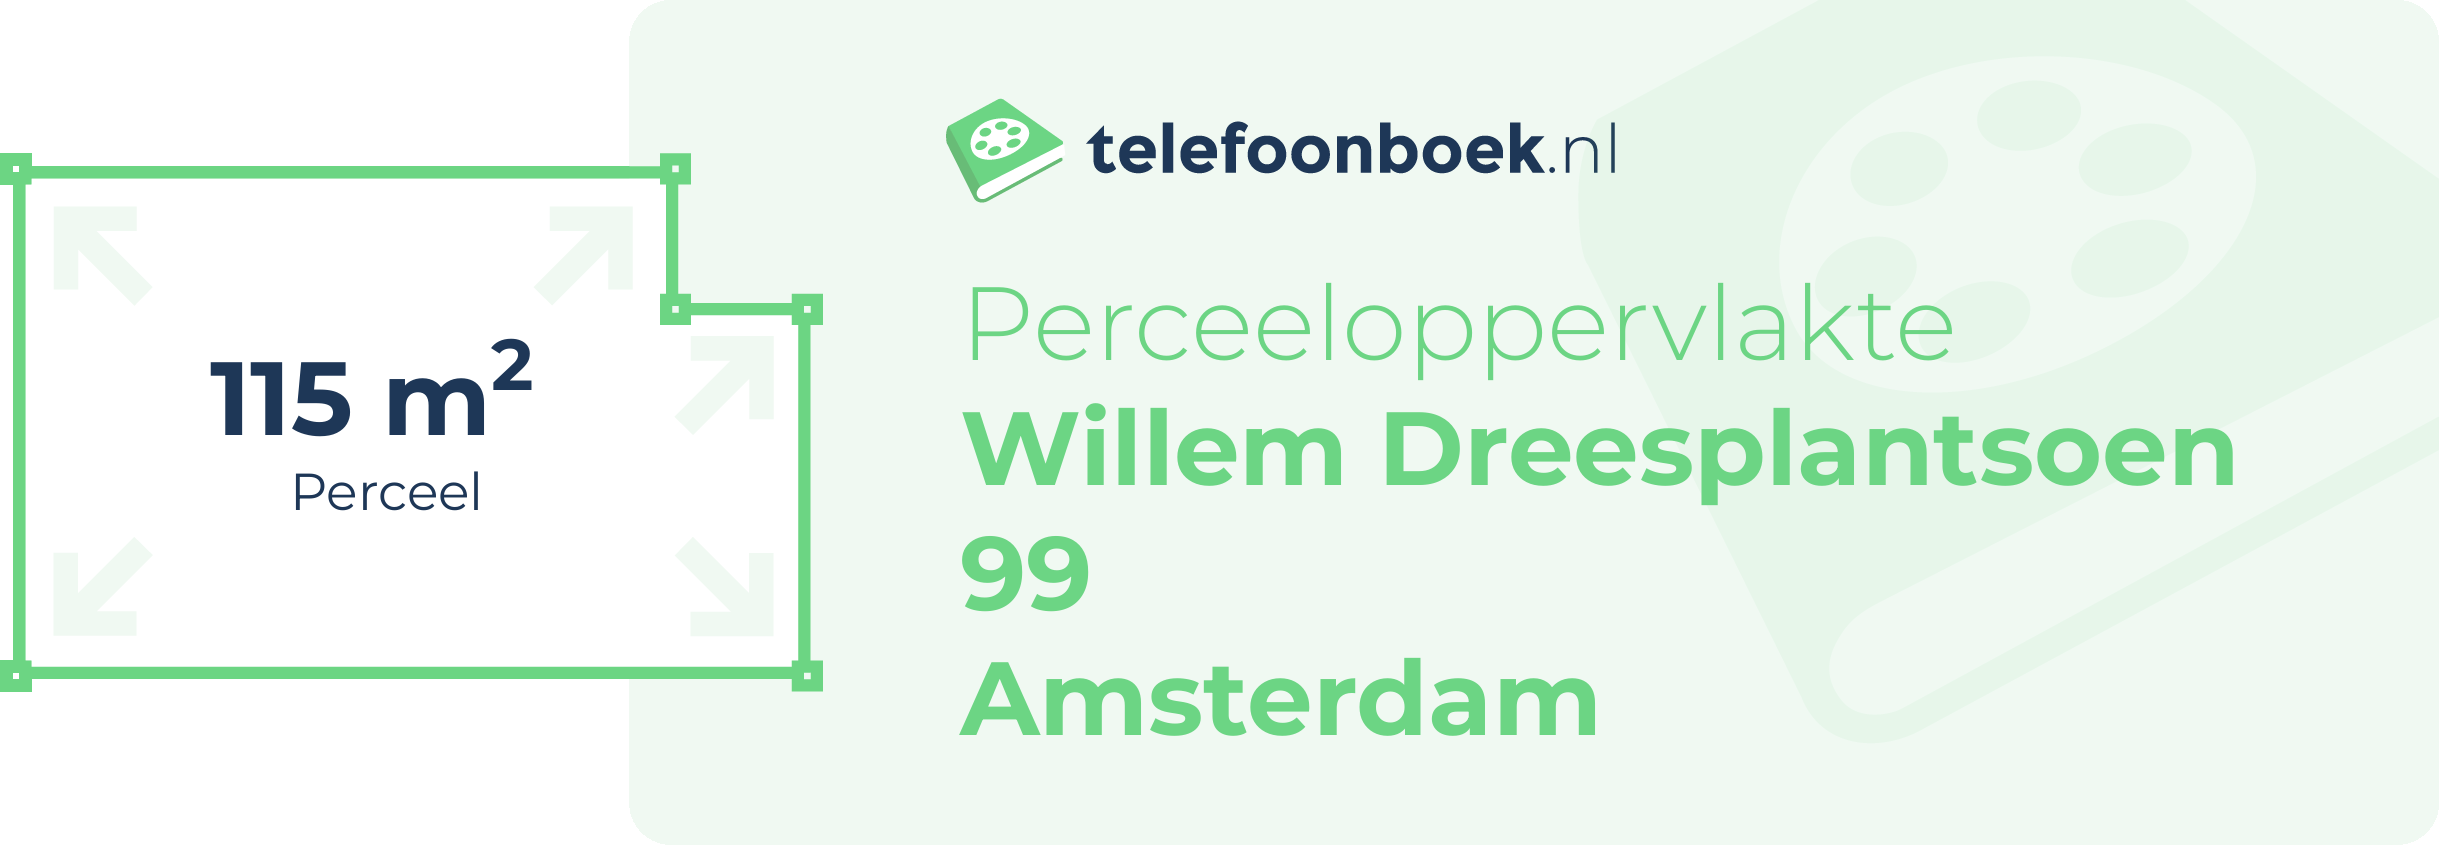 Perceeloppervlakte Willem Dreesplantsoen 99 Amsterdam